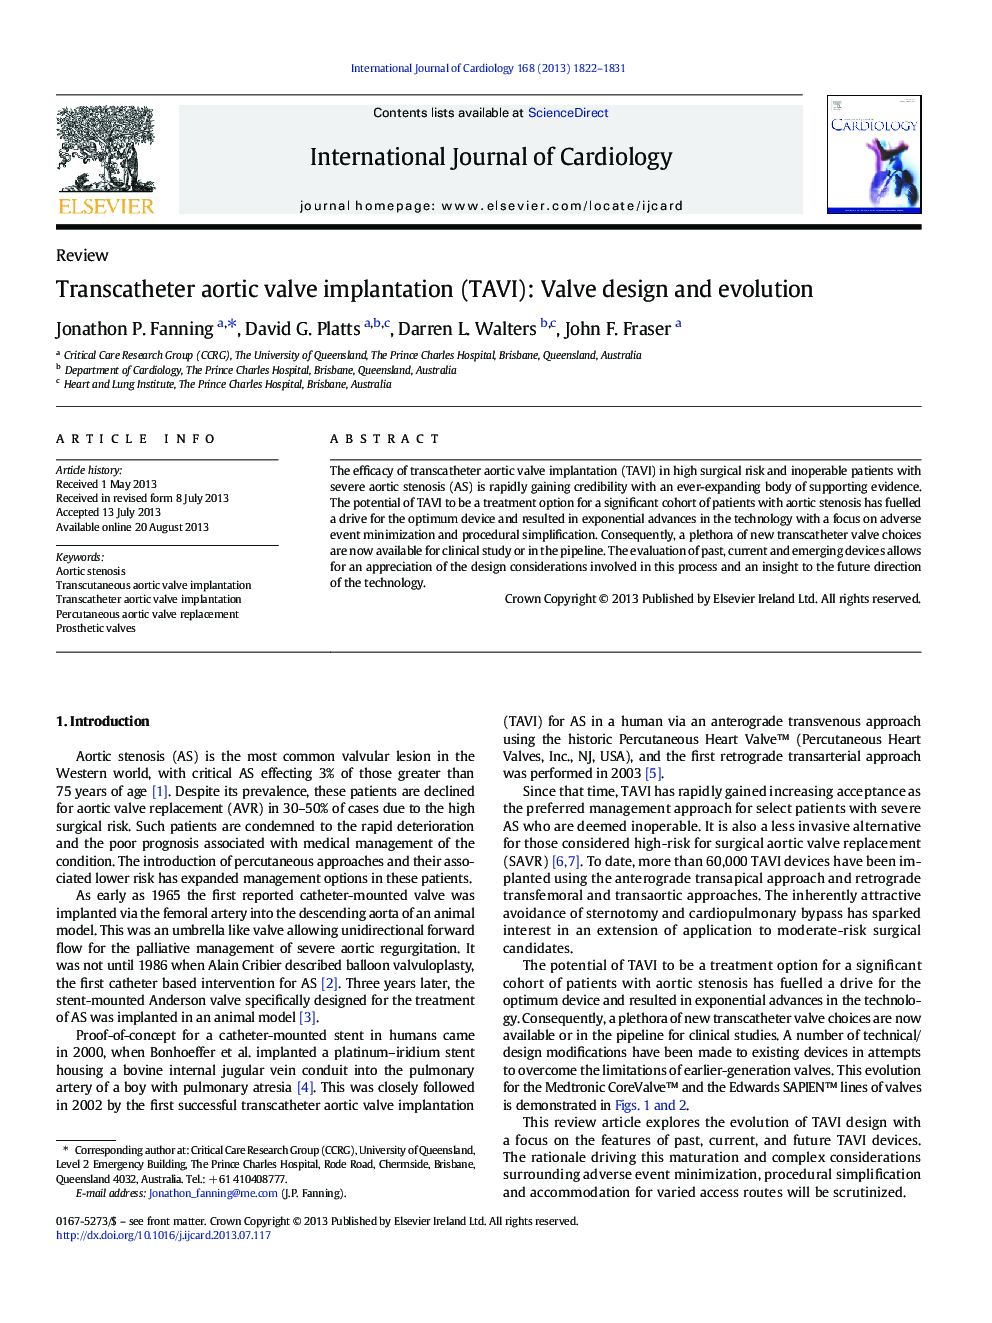 Transcatheter aortic valve implantation (TAVI): Valve design and evolution